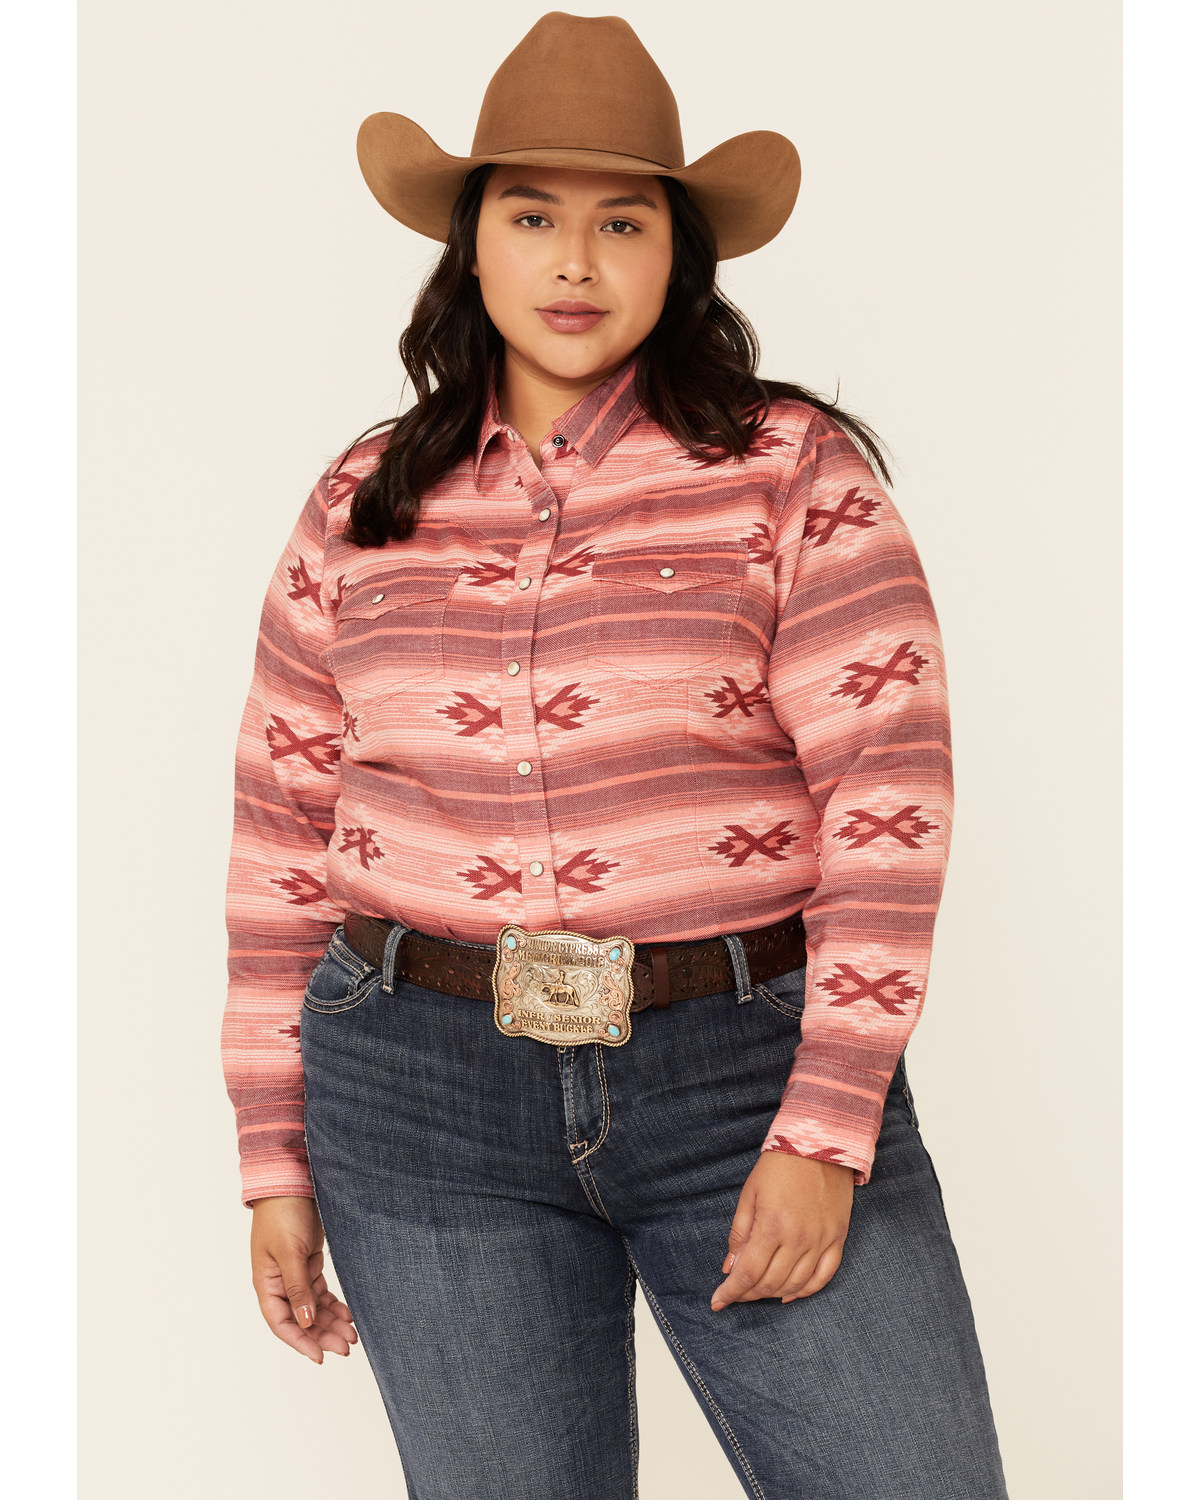 Ariat Women's R.E.A.L Adorable Red Serape Print Long Sleeve Snap Western Core Shirt - Plus